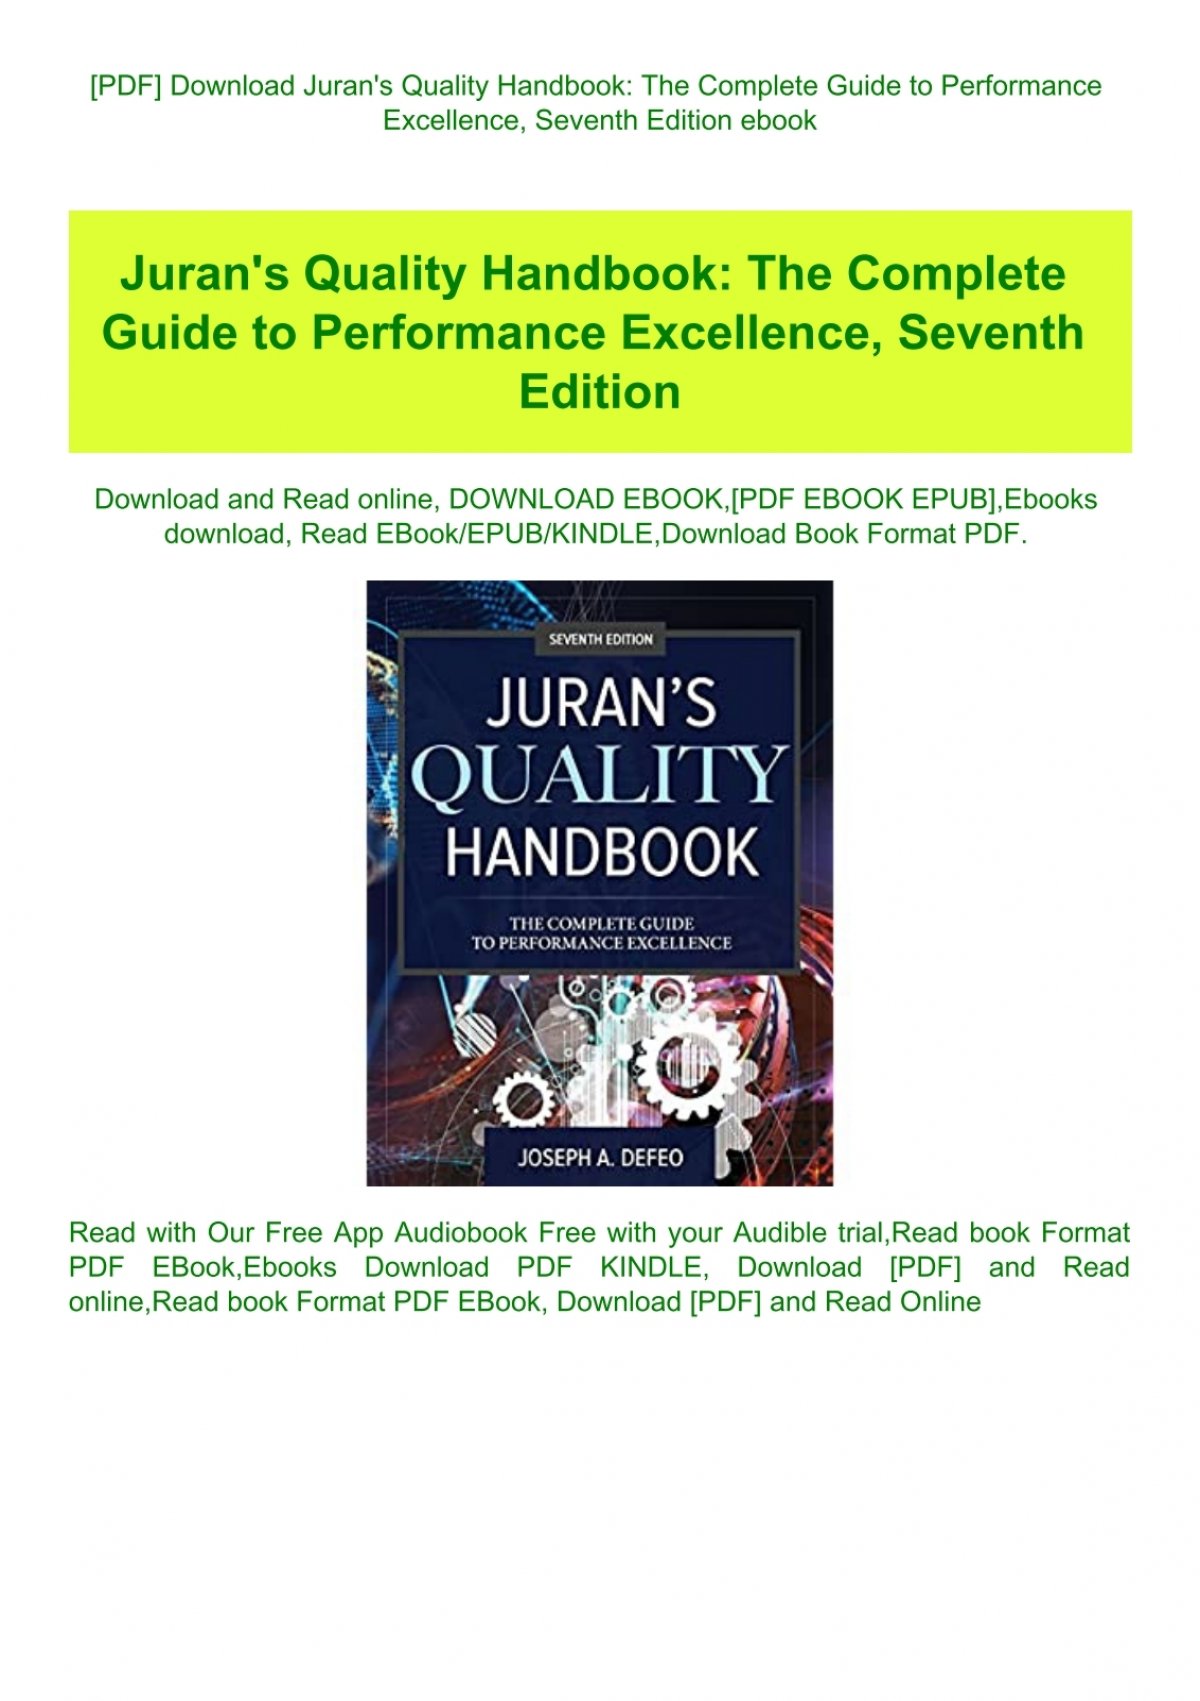 jurans quality handbook 7th edition pdf free download